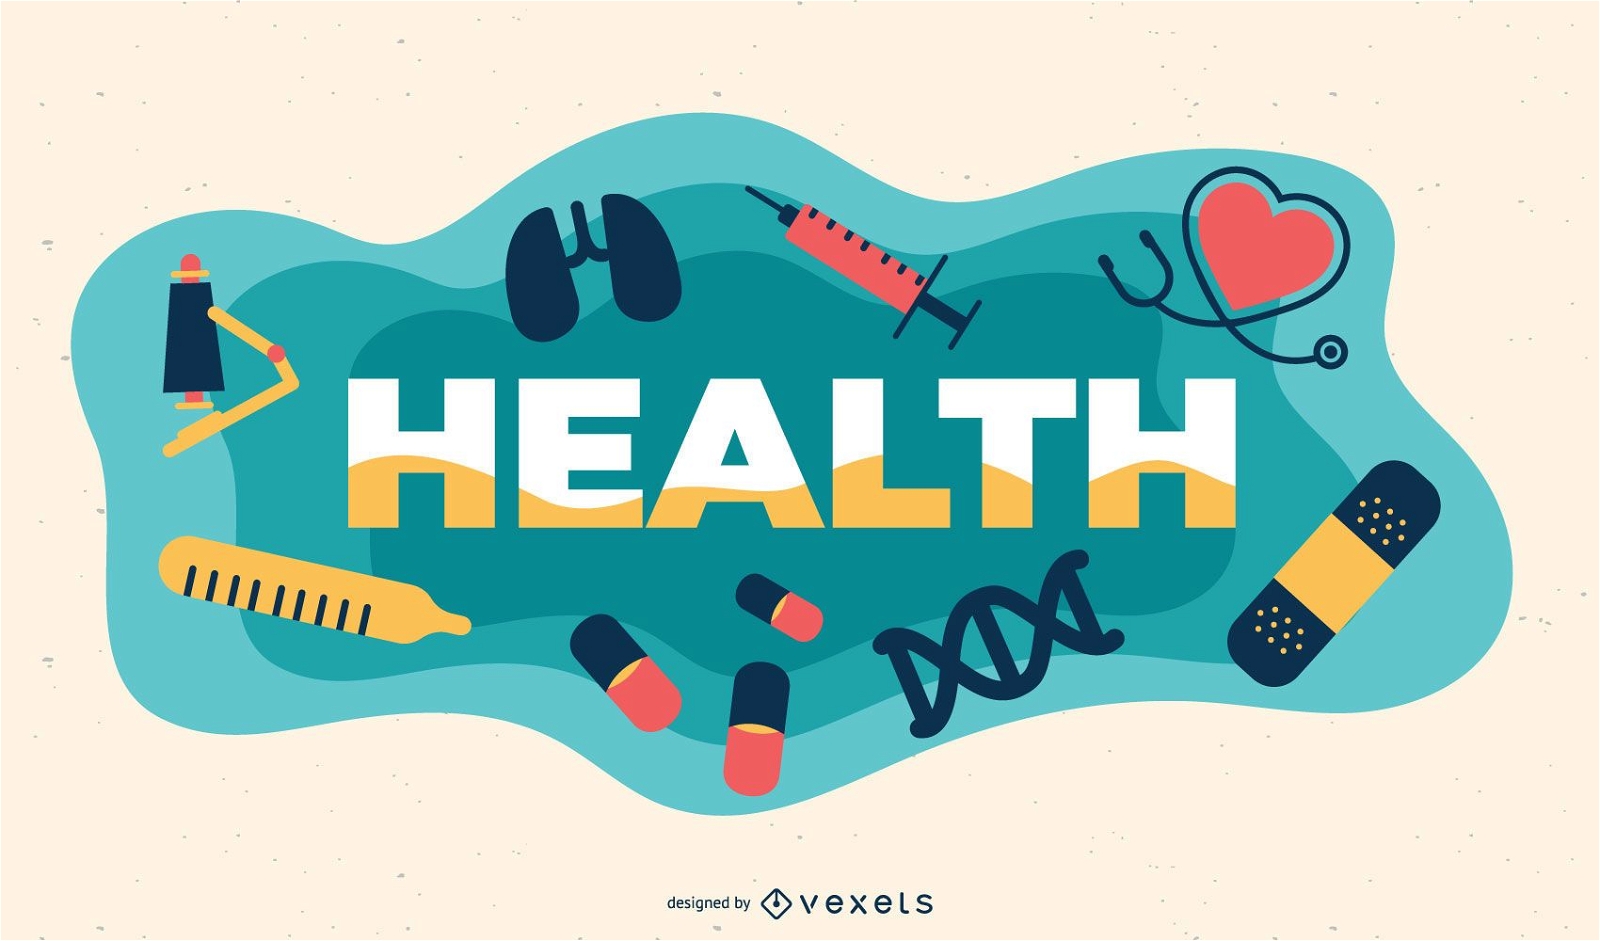 Health subject illustration